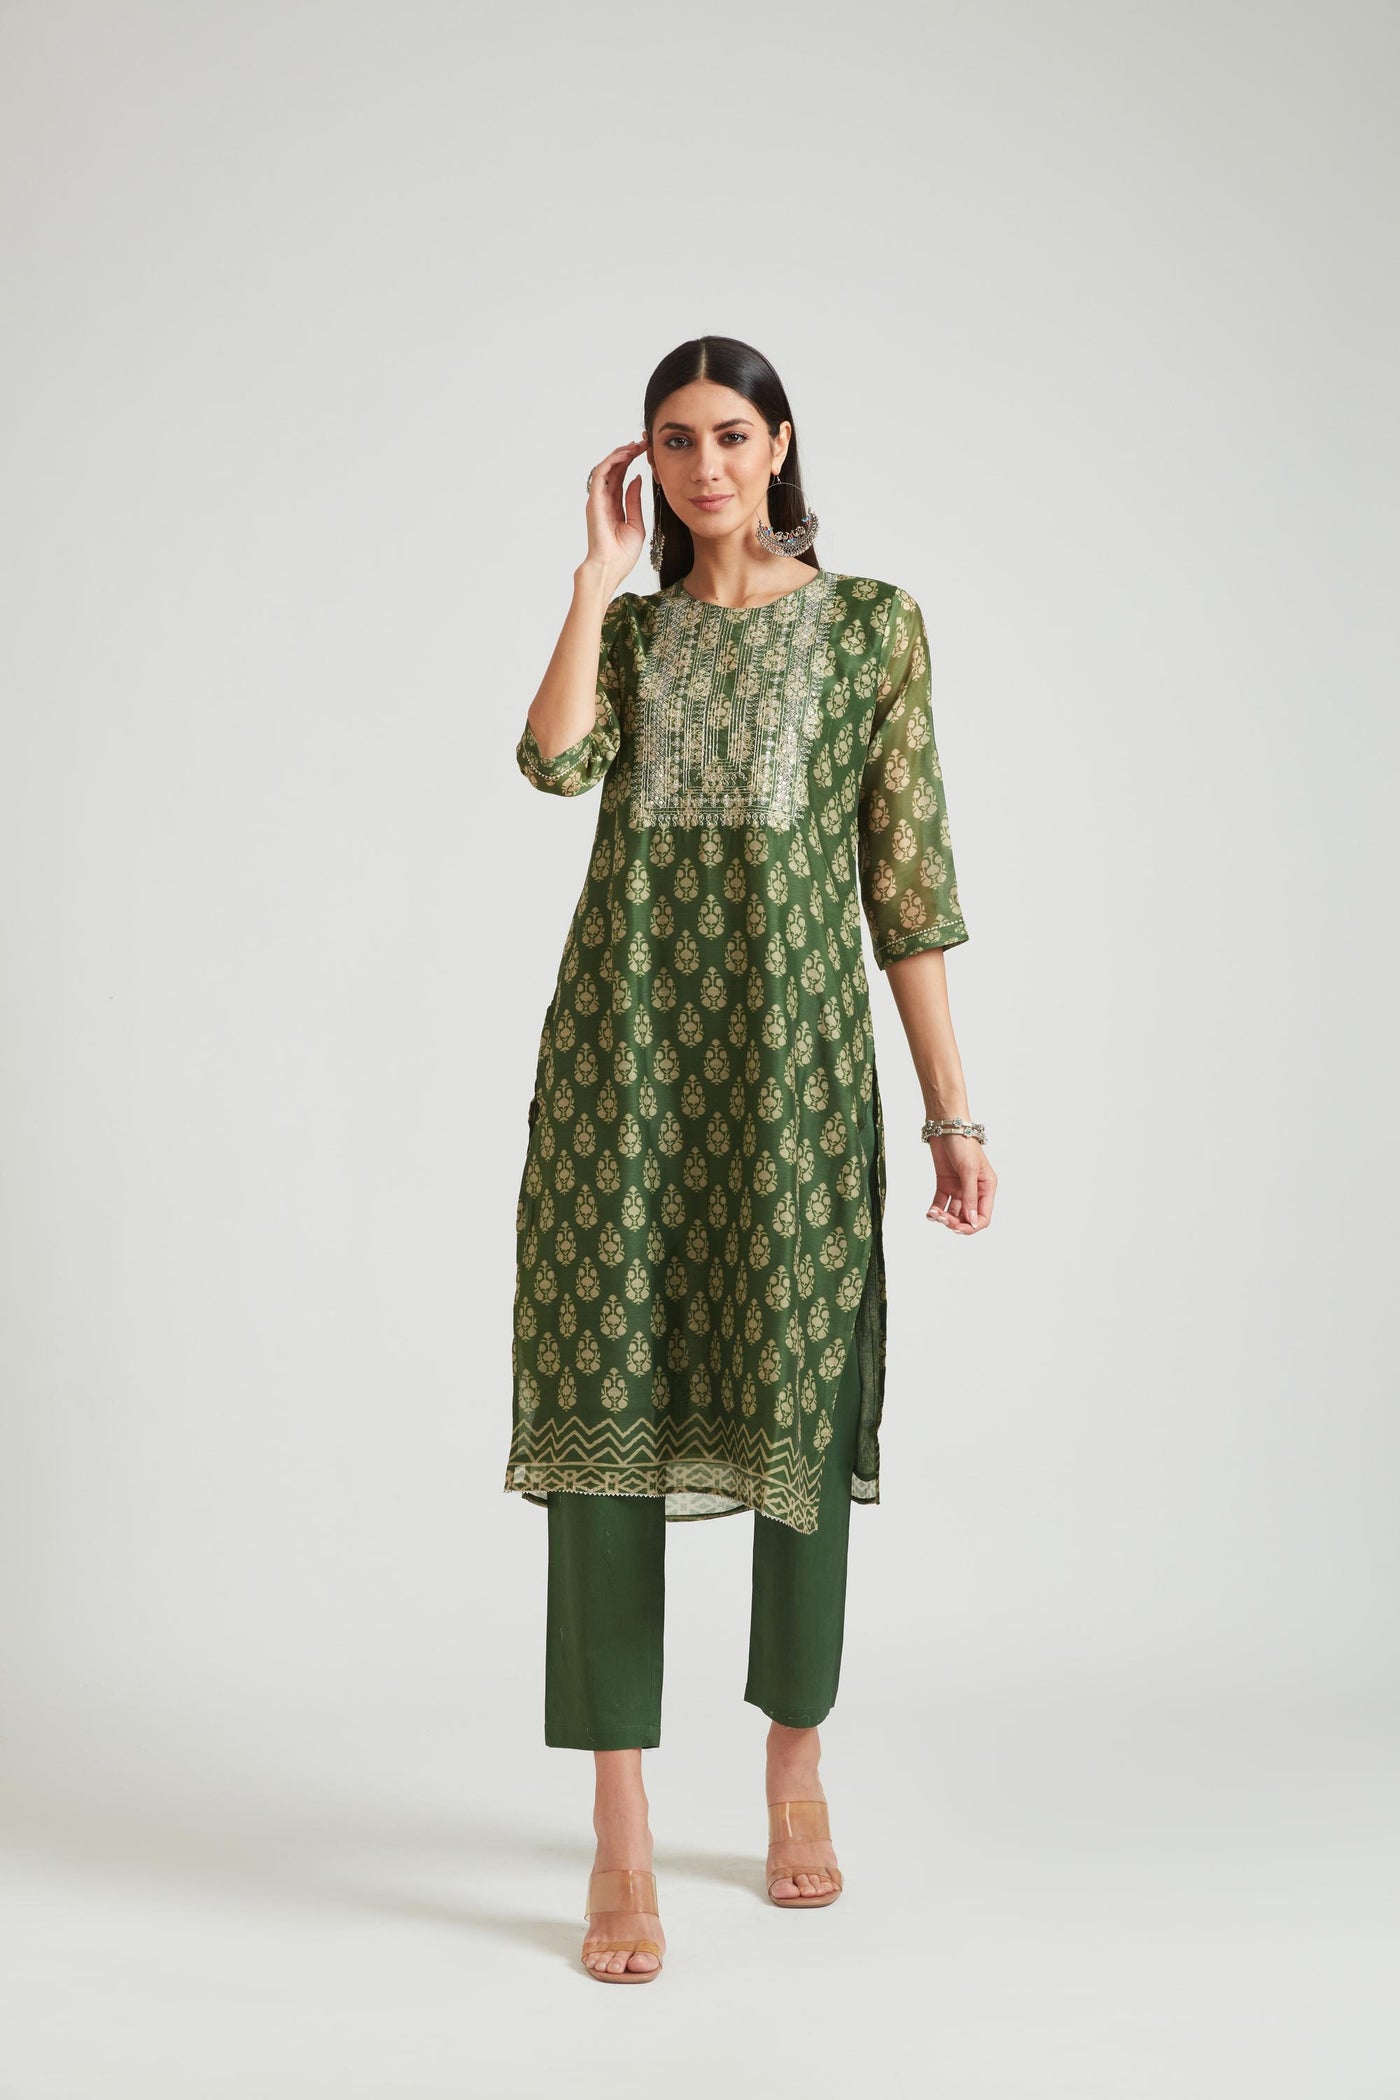 Neeru's Green Color Chanderi Fabric Salwar Kameez